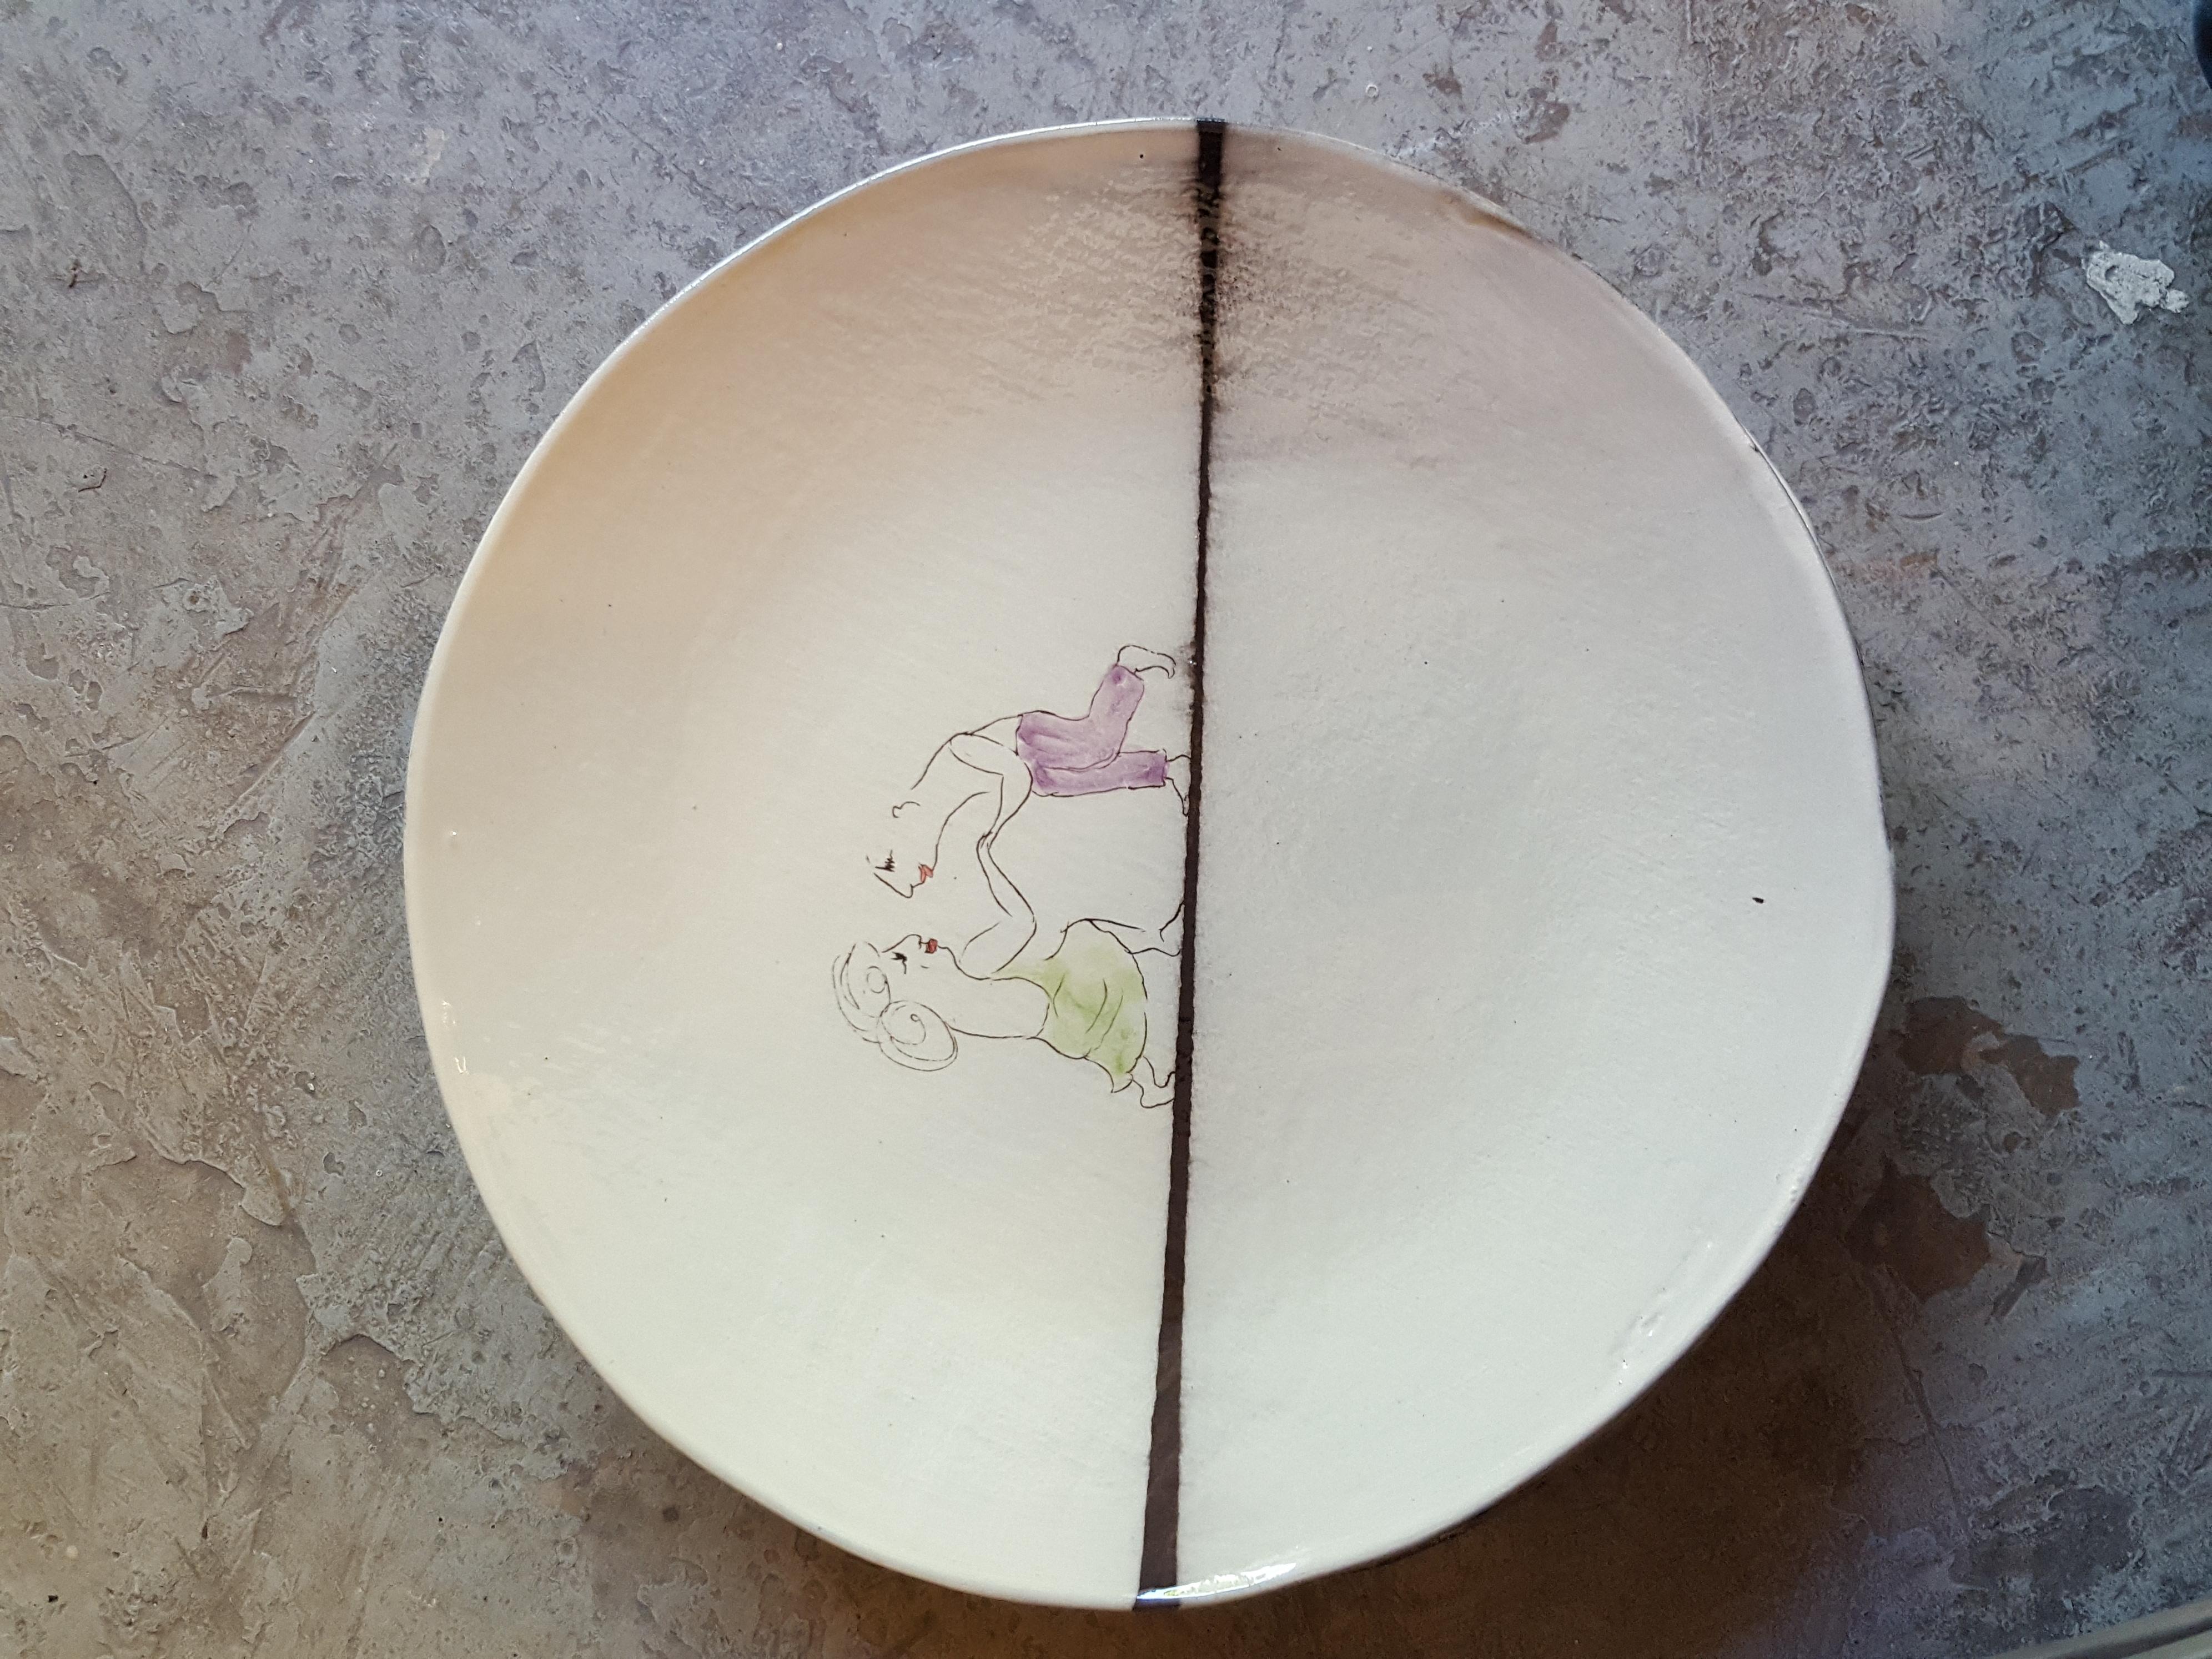 Contemporary Unique French Artist's Ceramic Dinner Plates